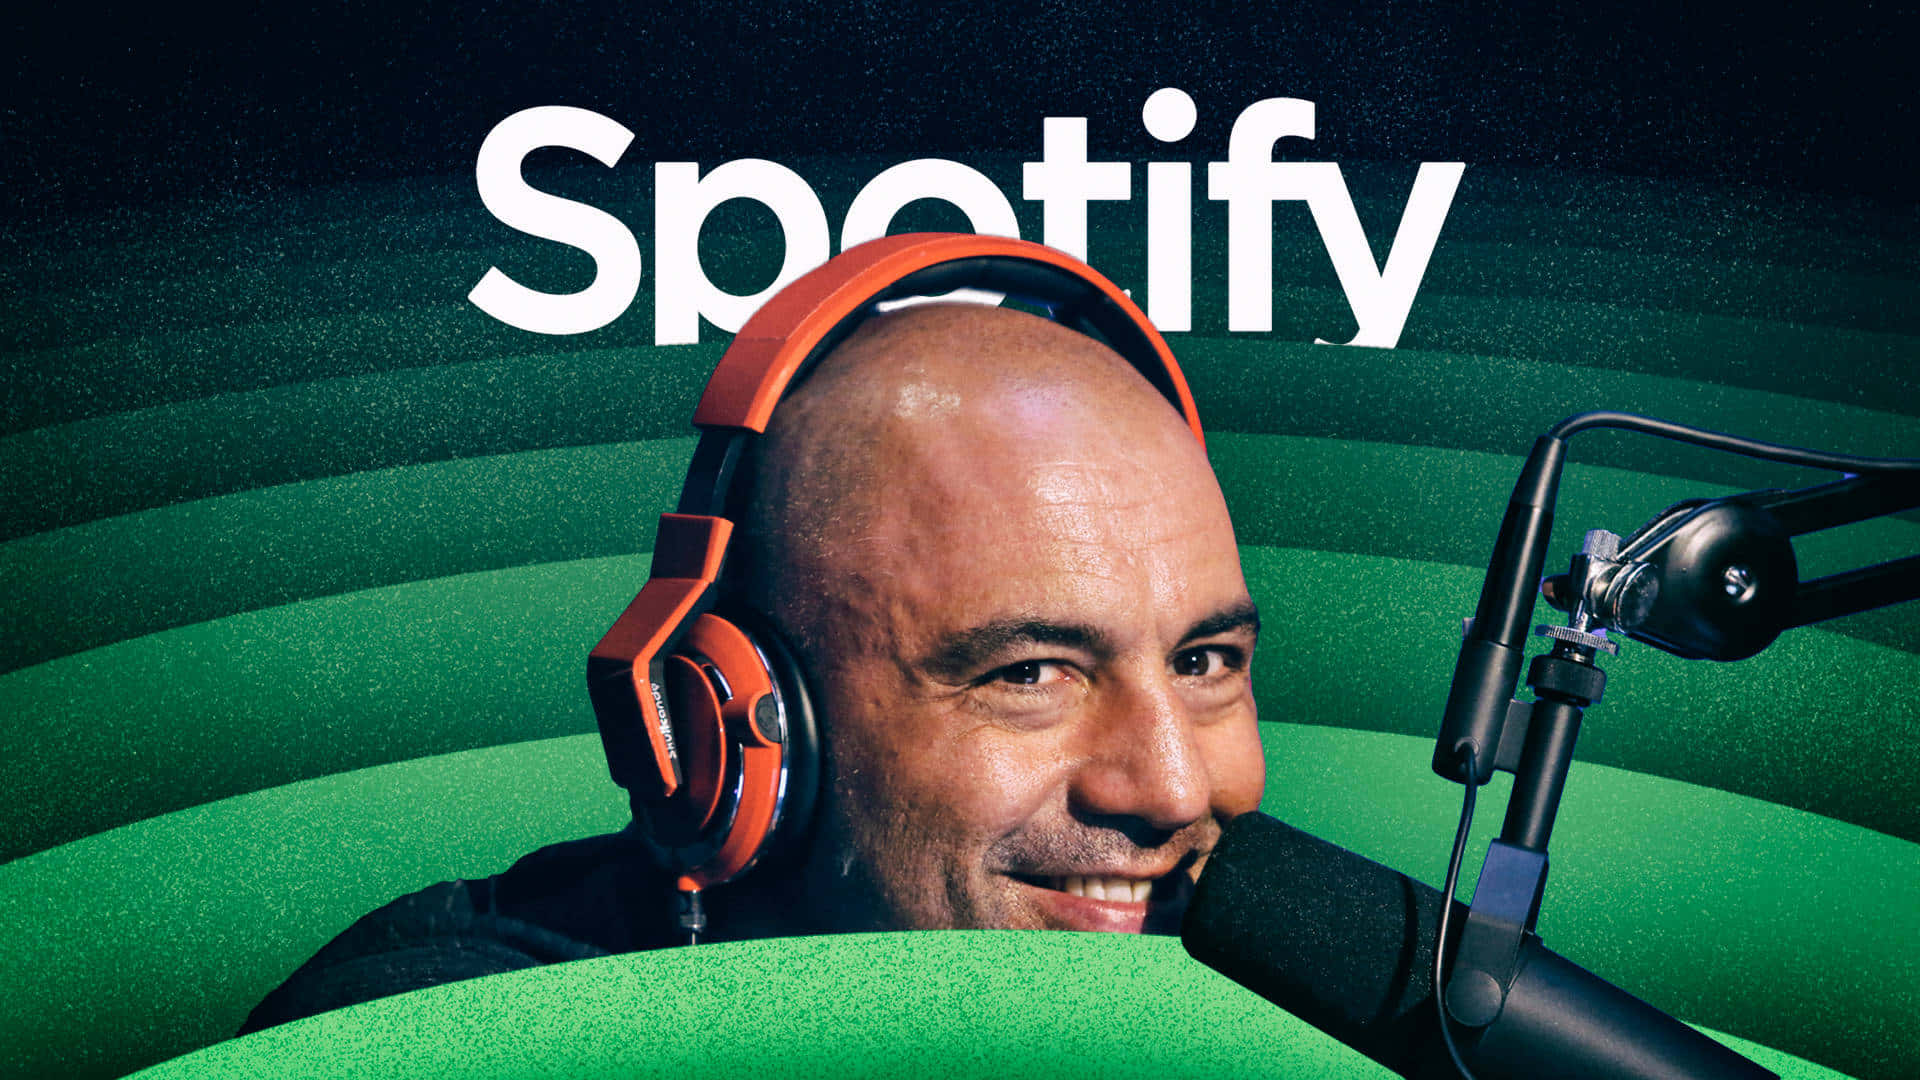 Desbloqueatu Experiencia De Escucha De Música Con Spotify.